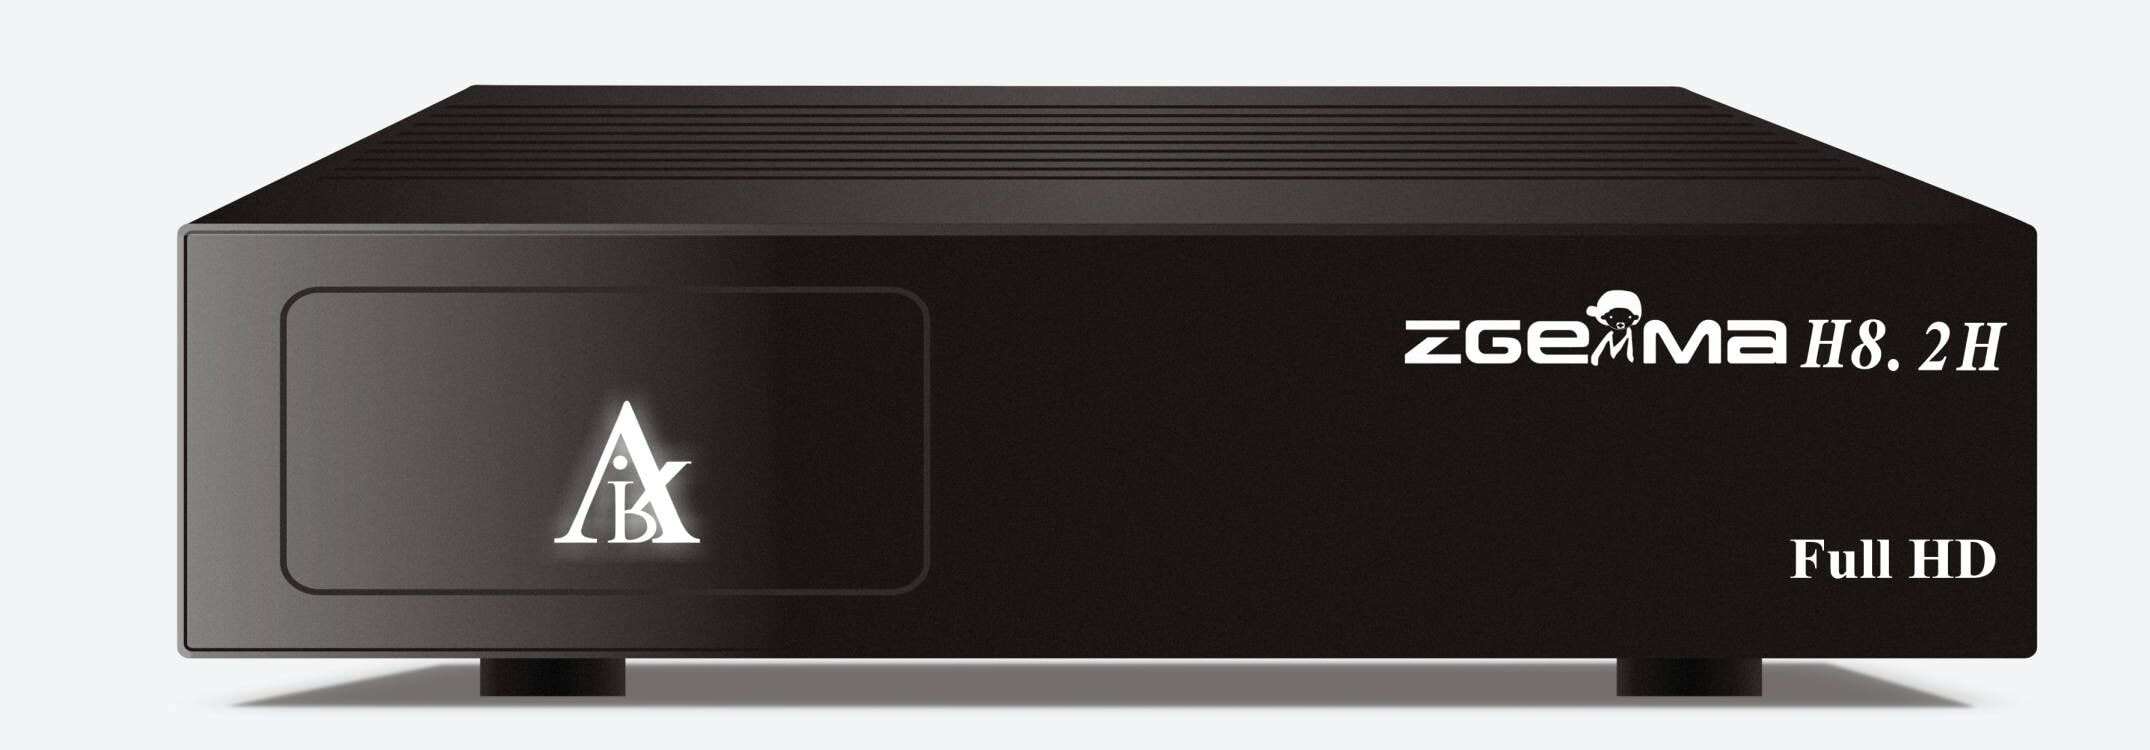 Versatile Zgemma H8.2h Satellite TV Receiver - 512MB Nand Flash